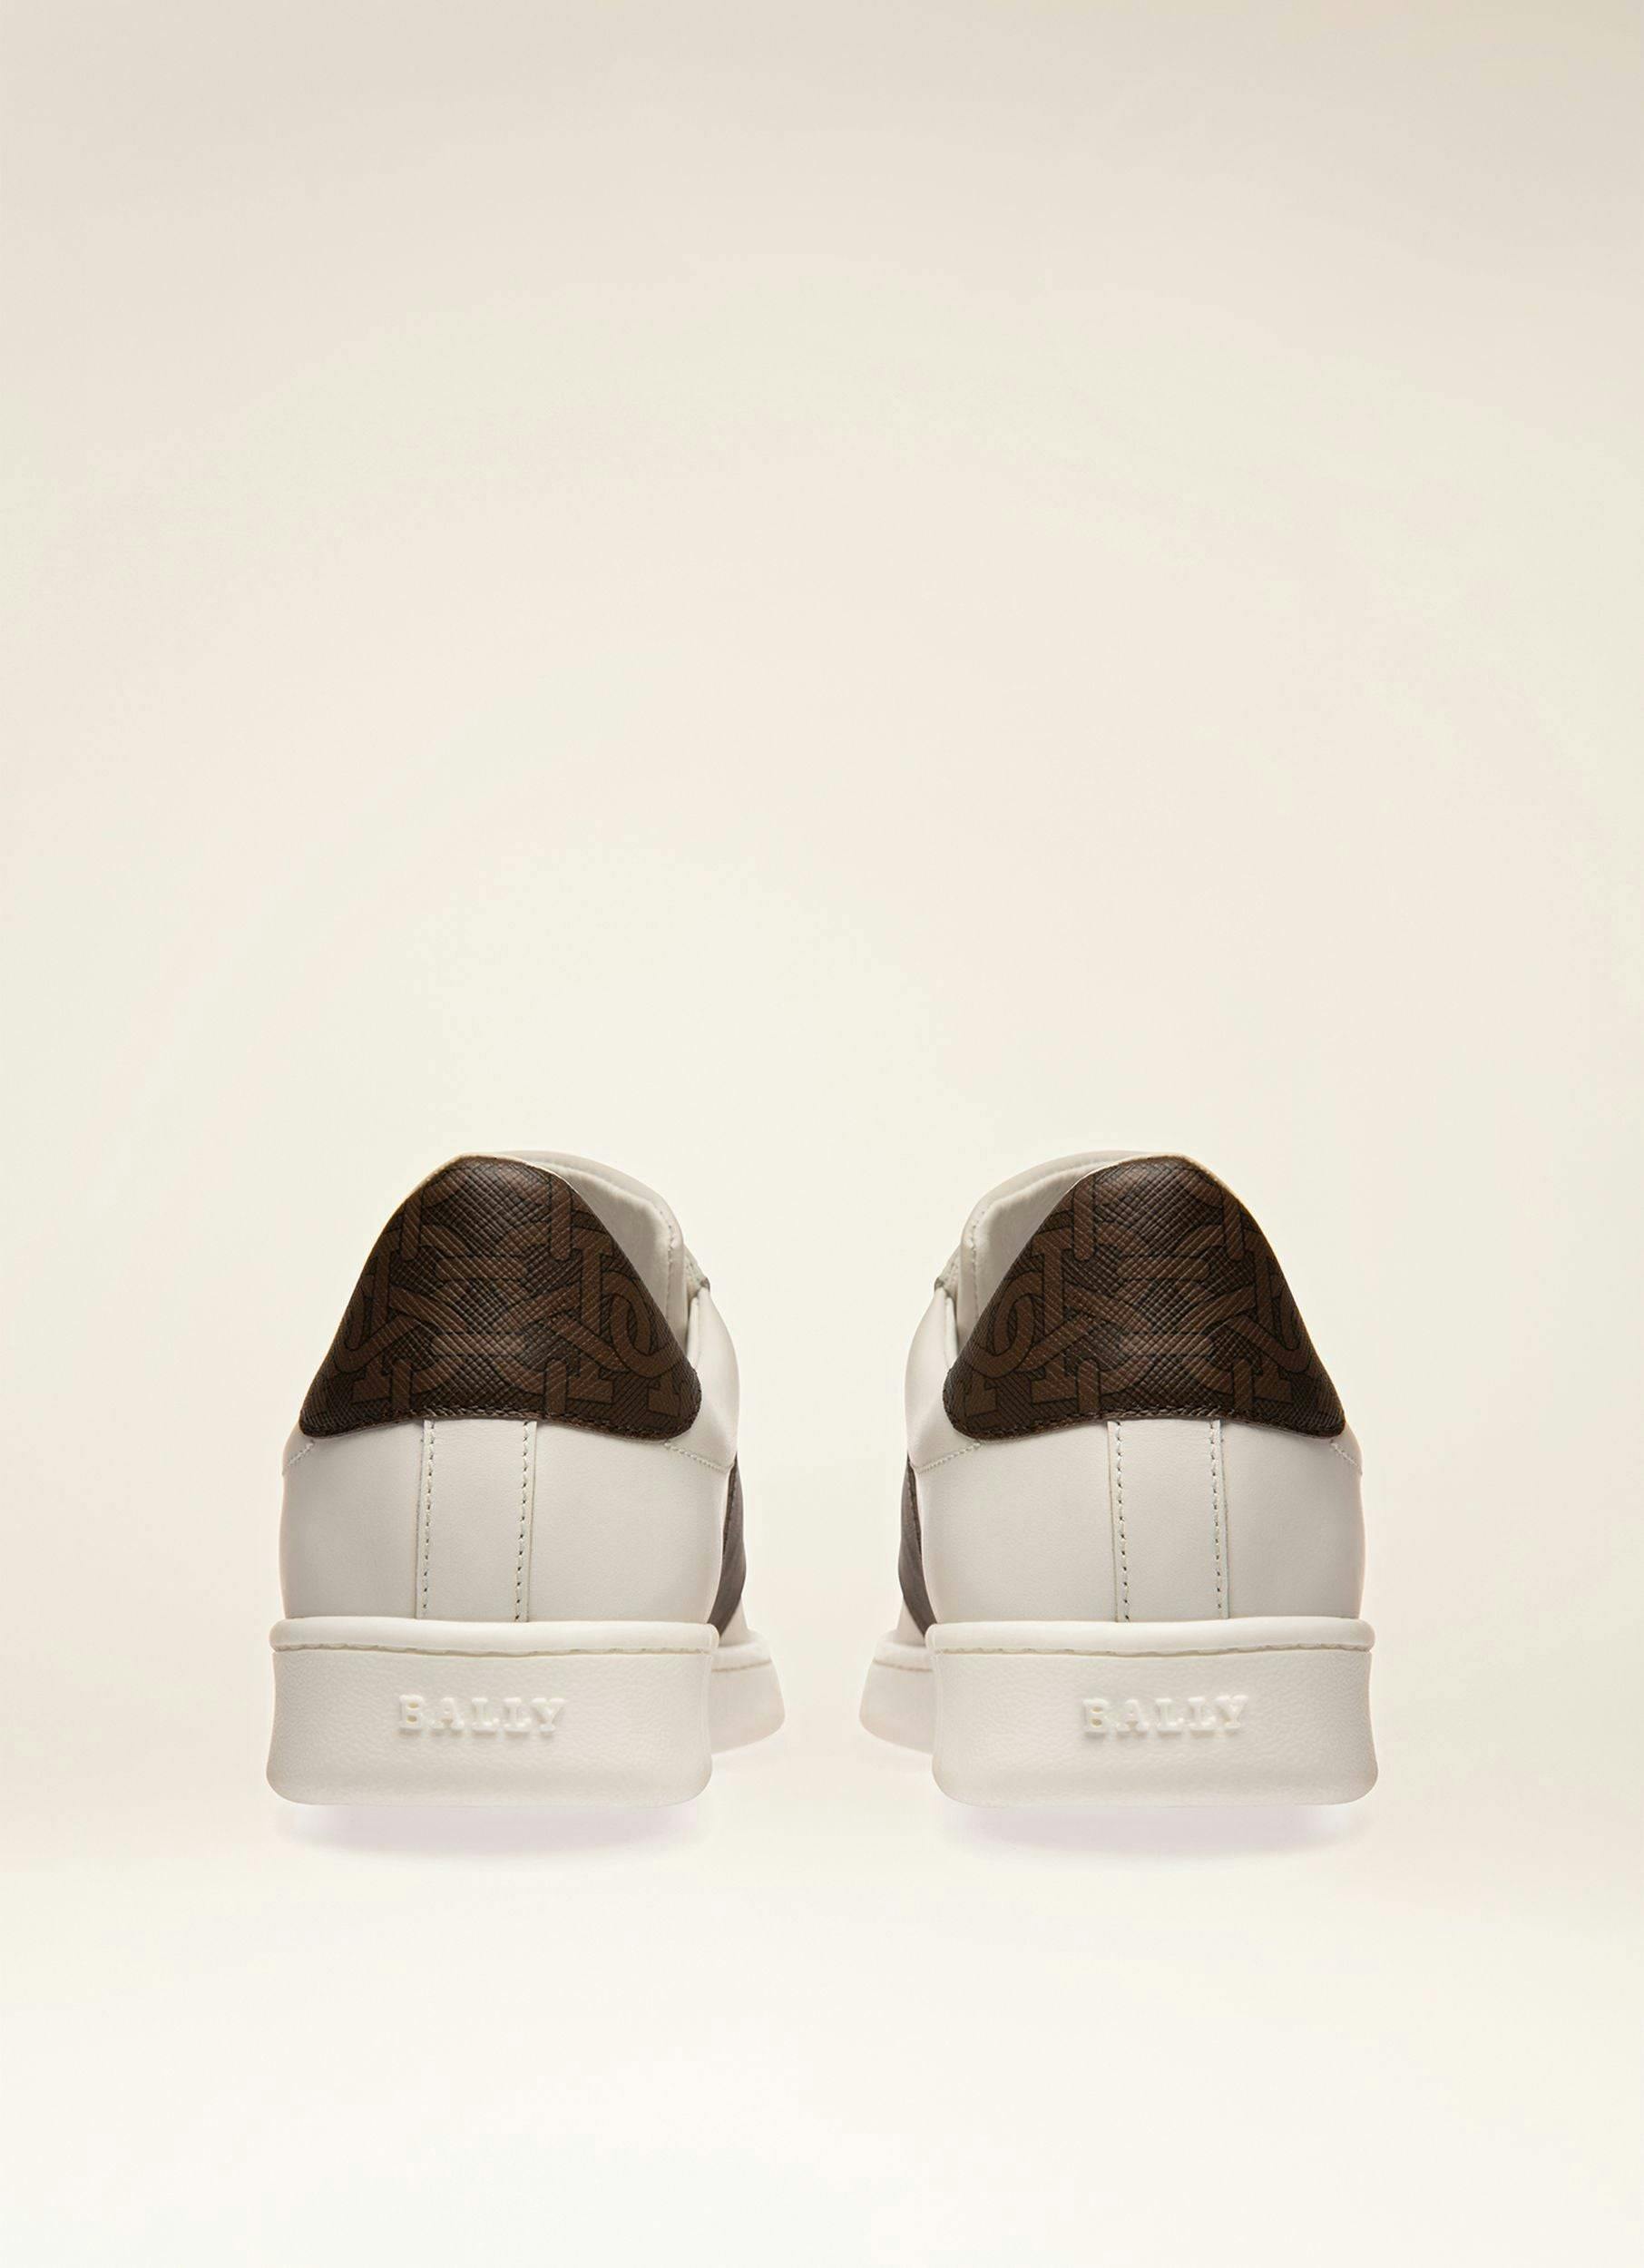 WILSON Leather Sneakers In White - Women's - Bally - 03